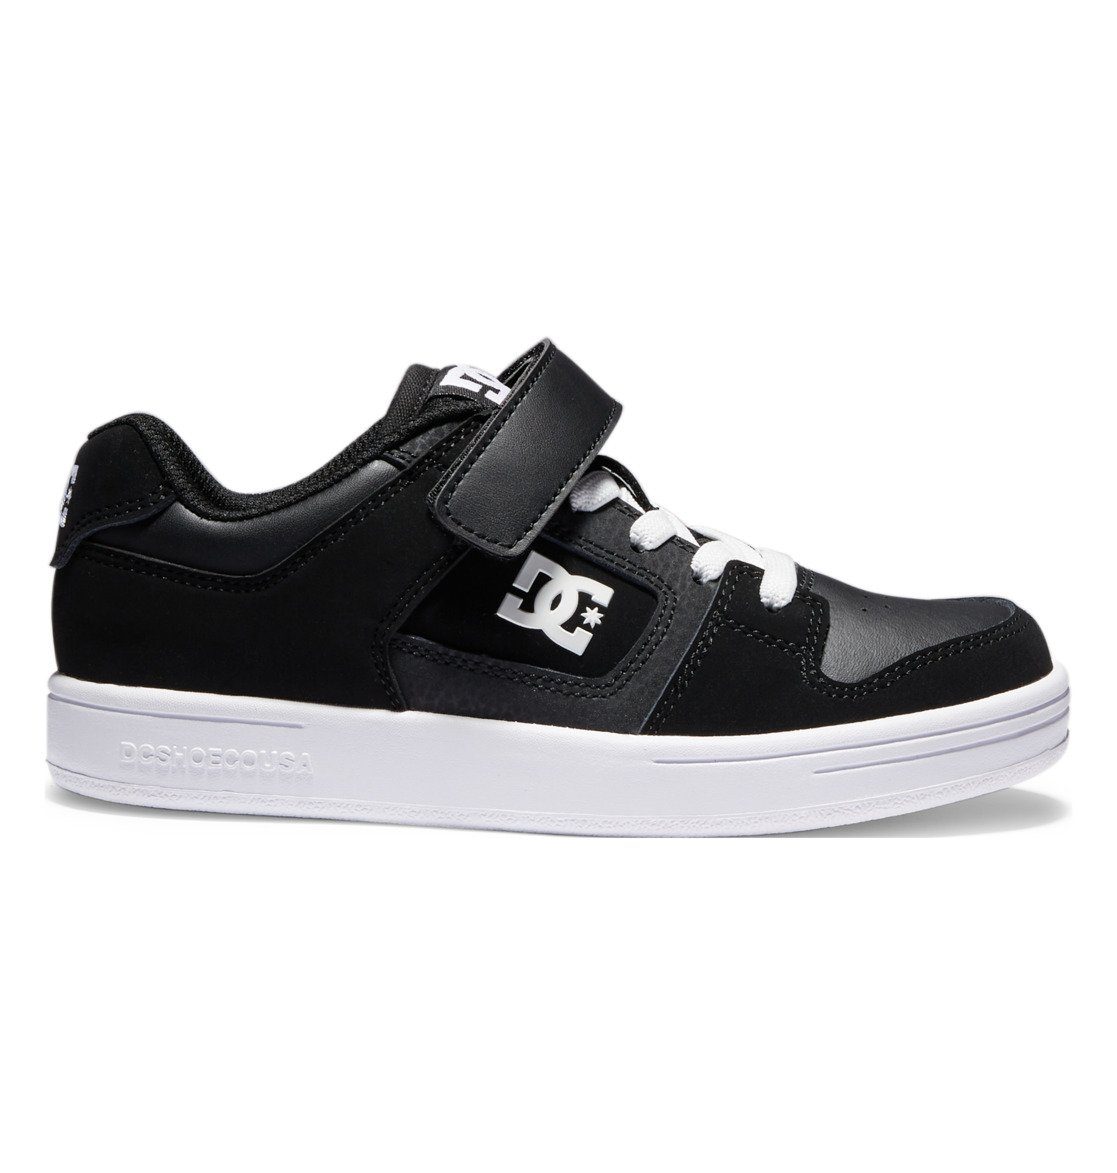 Shoes Manteca DC Black/Black/White V 4 Sneaker